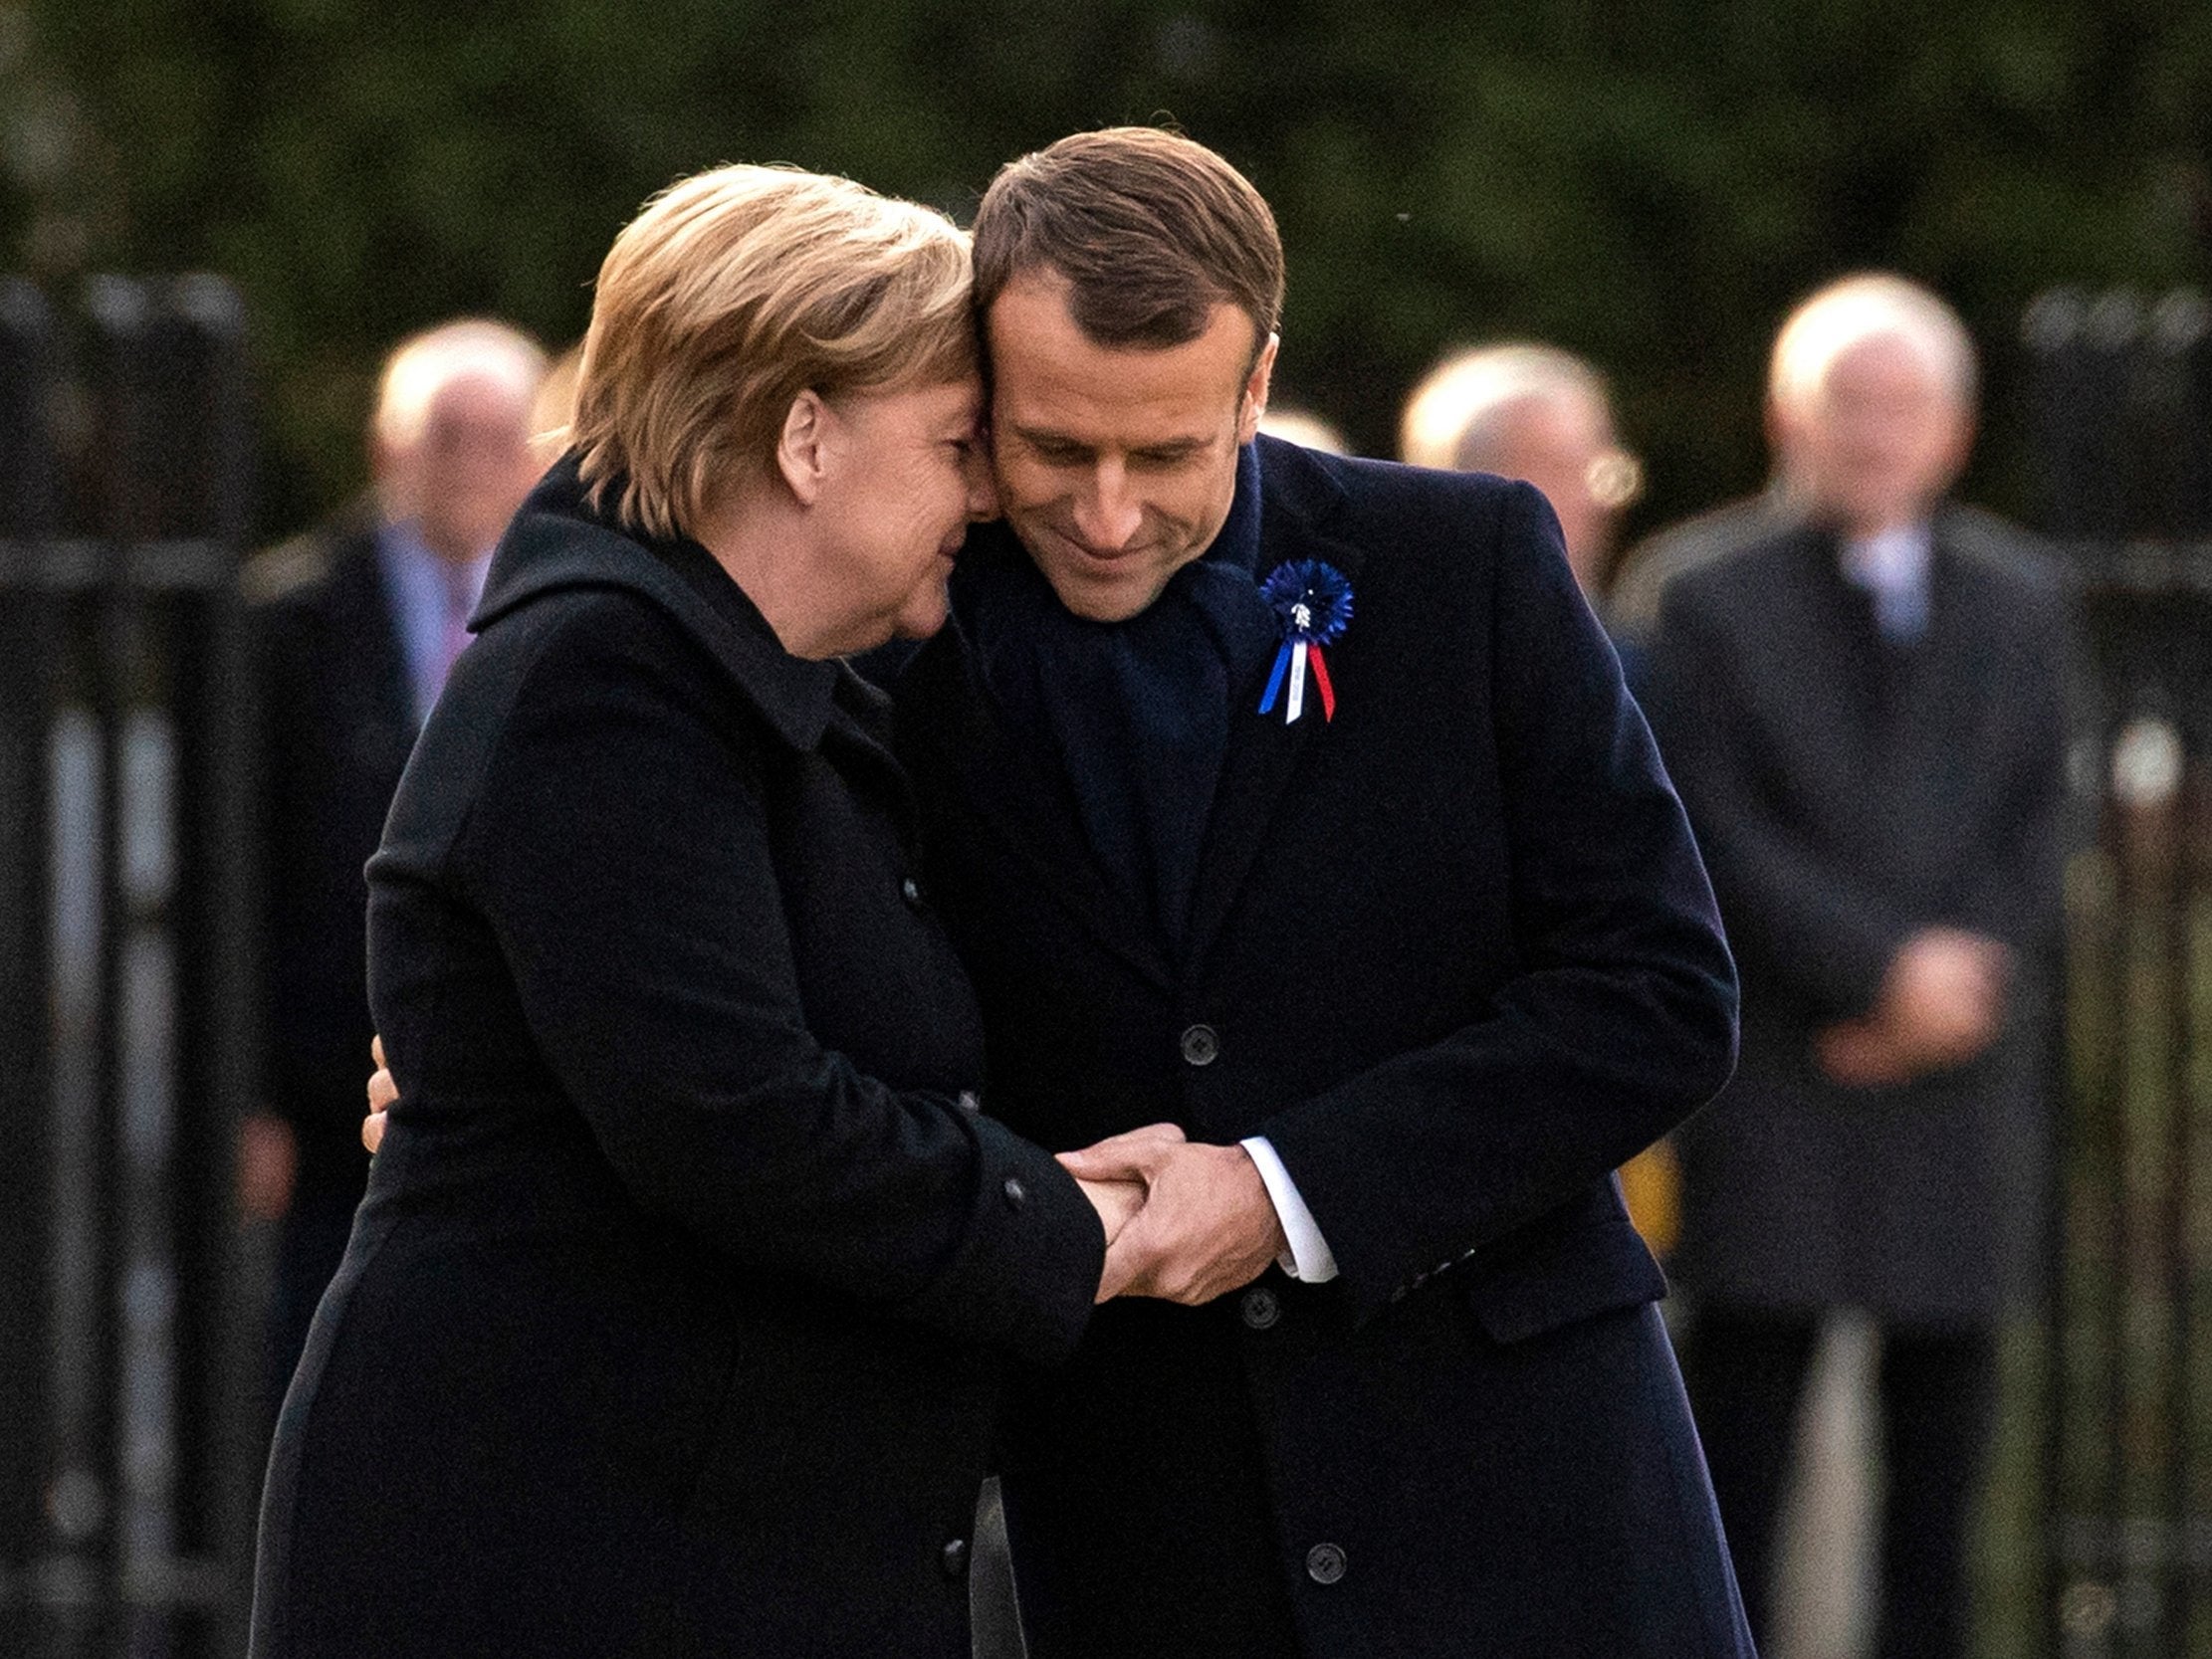 Ms Merkel and Mr Macron embrace at ceremony